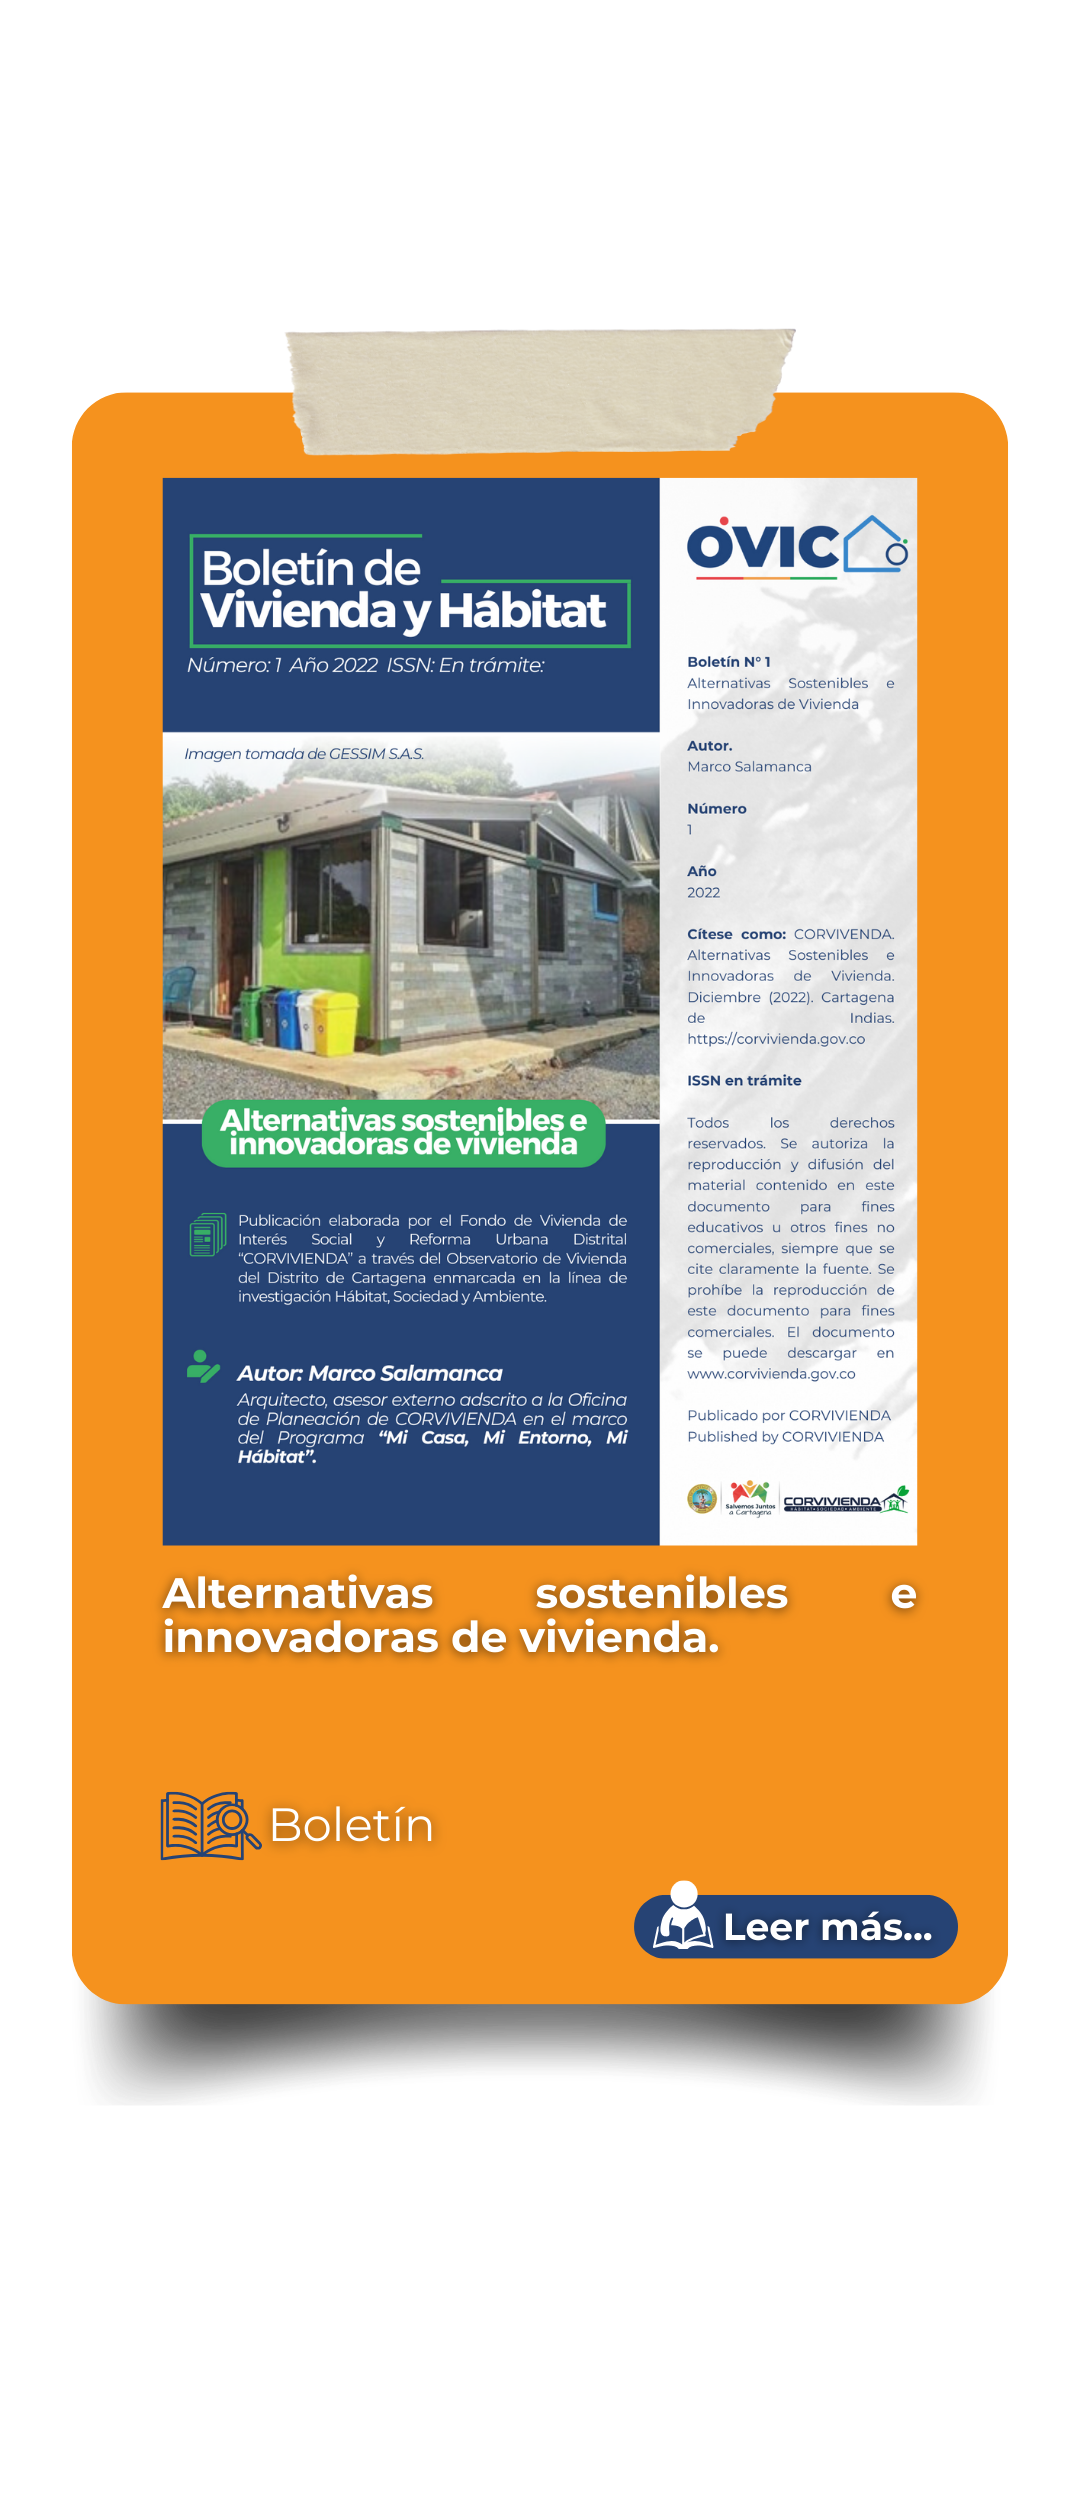 Boletín de Vivienda y Hábitat. Alternativas Sostenibles e Innovadoras de Vivienda